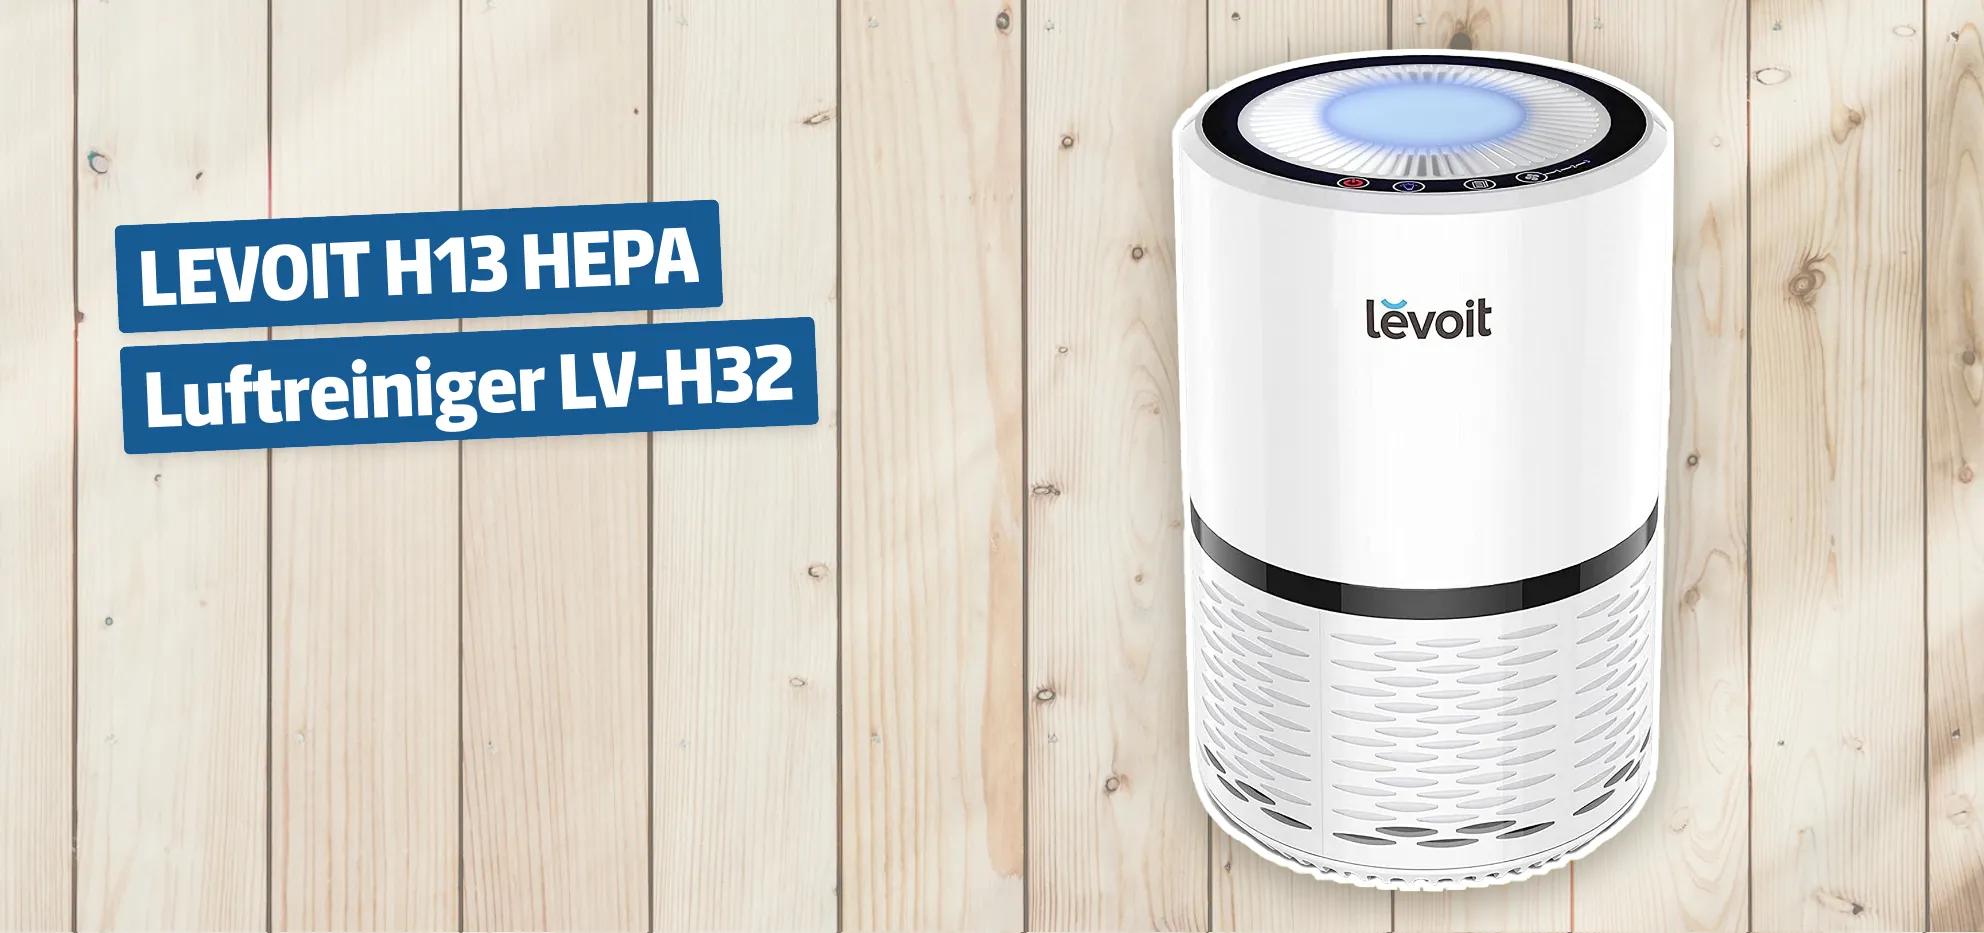 LEVOIT H13 HEPA Luftreiniger LV-H32